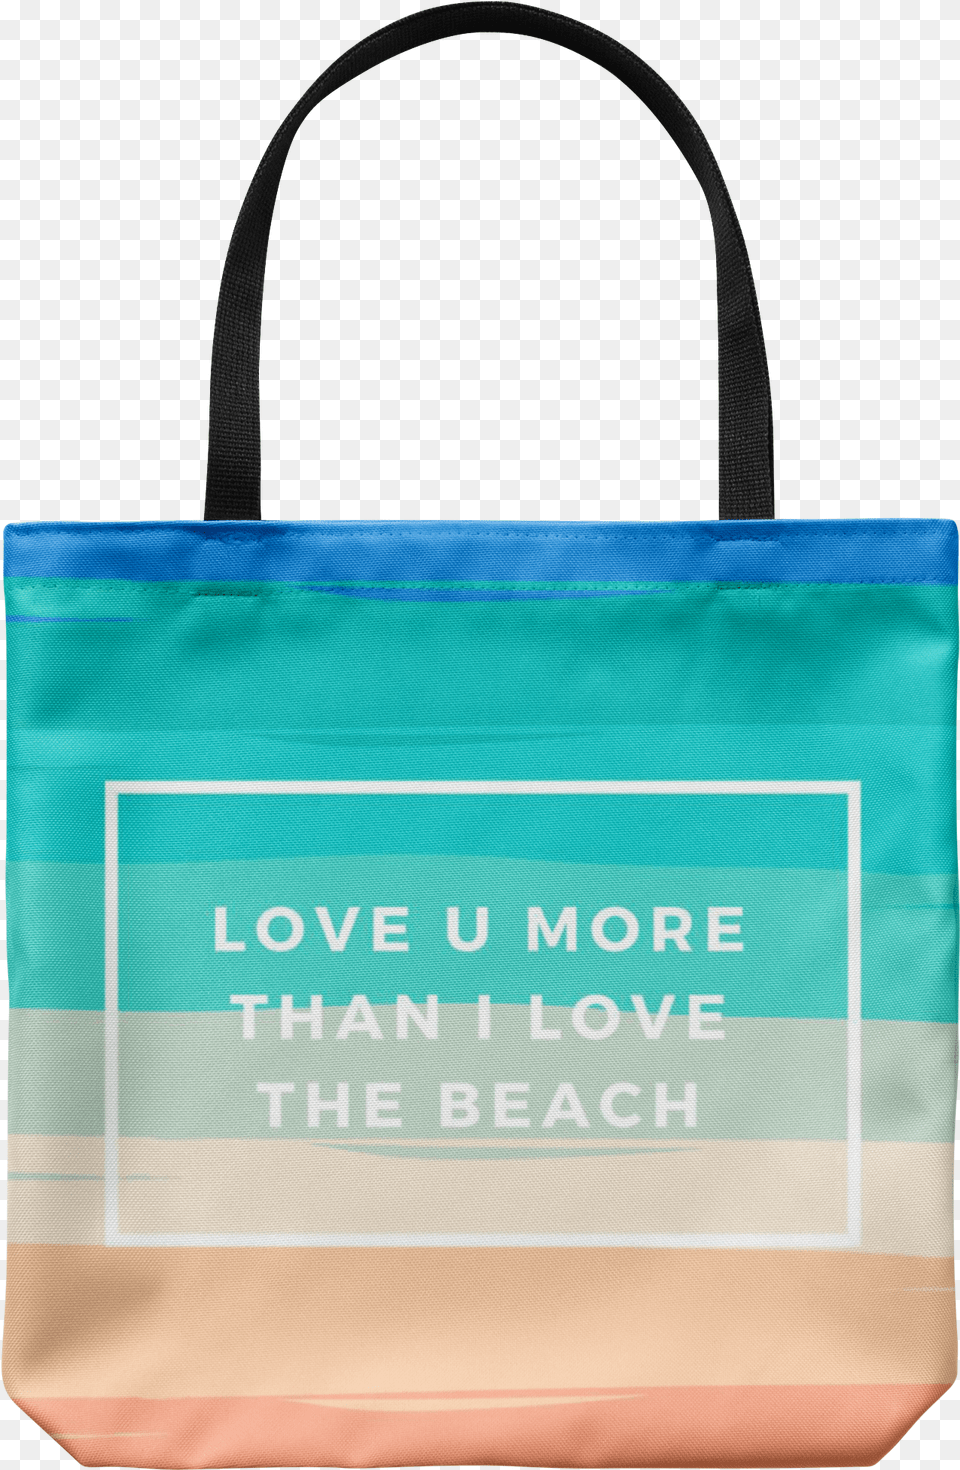 Love You More Than I Love The Beach Tote Bag, Tote Bag, Accessories, Handbag, Shopping Bag Png Image